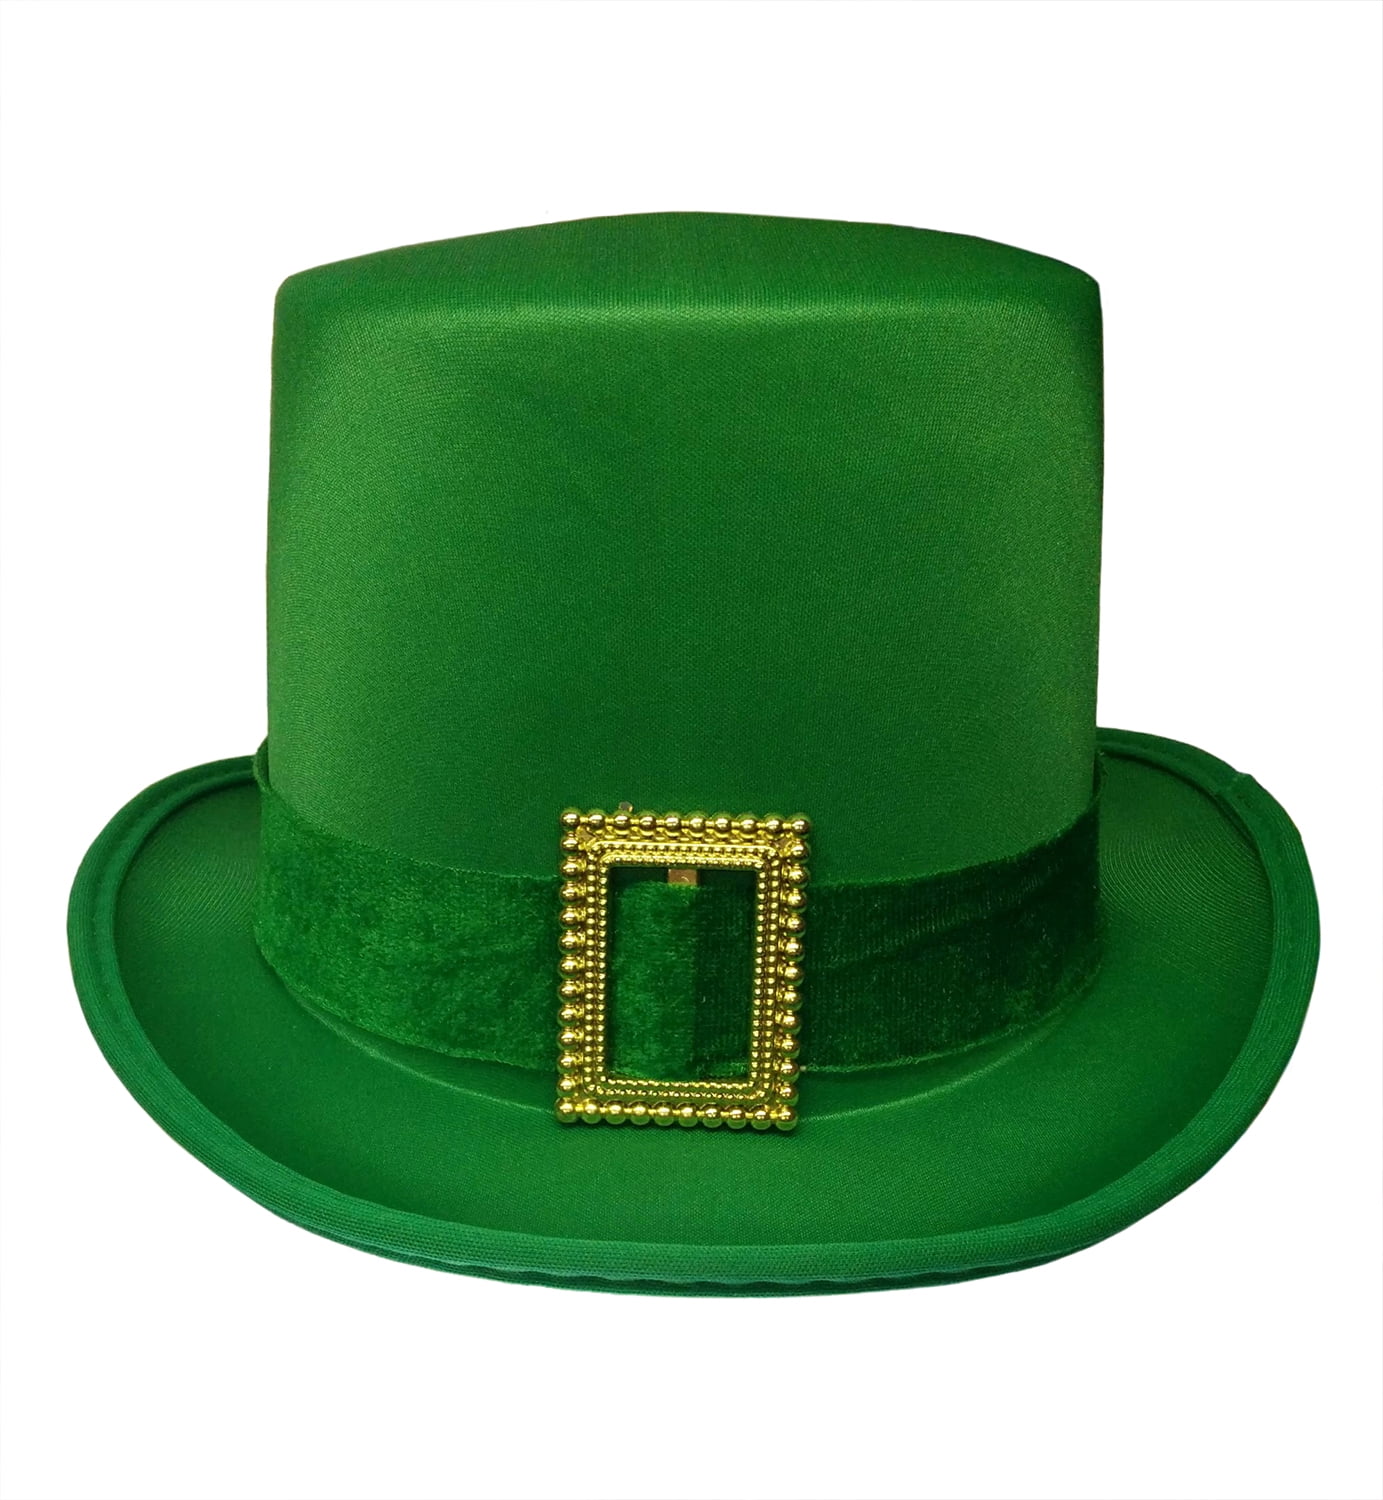 IRISH GREEN TOP HAT WITH BUCKLE ST PATRICK DAY LEPRECHAUN ACCESSORY FANCY DRESS 